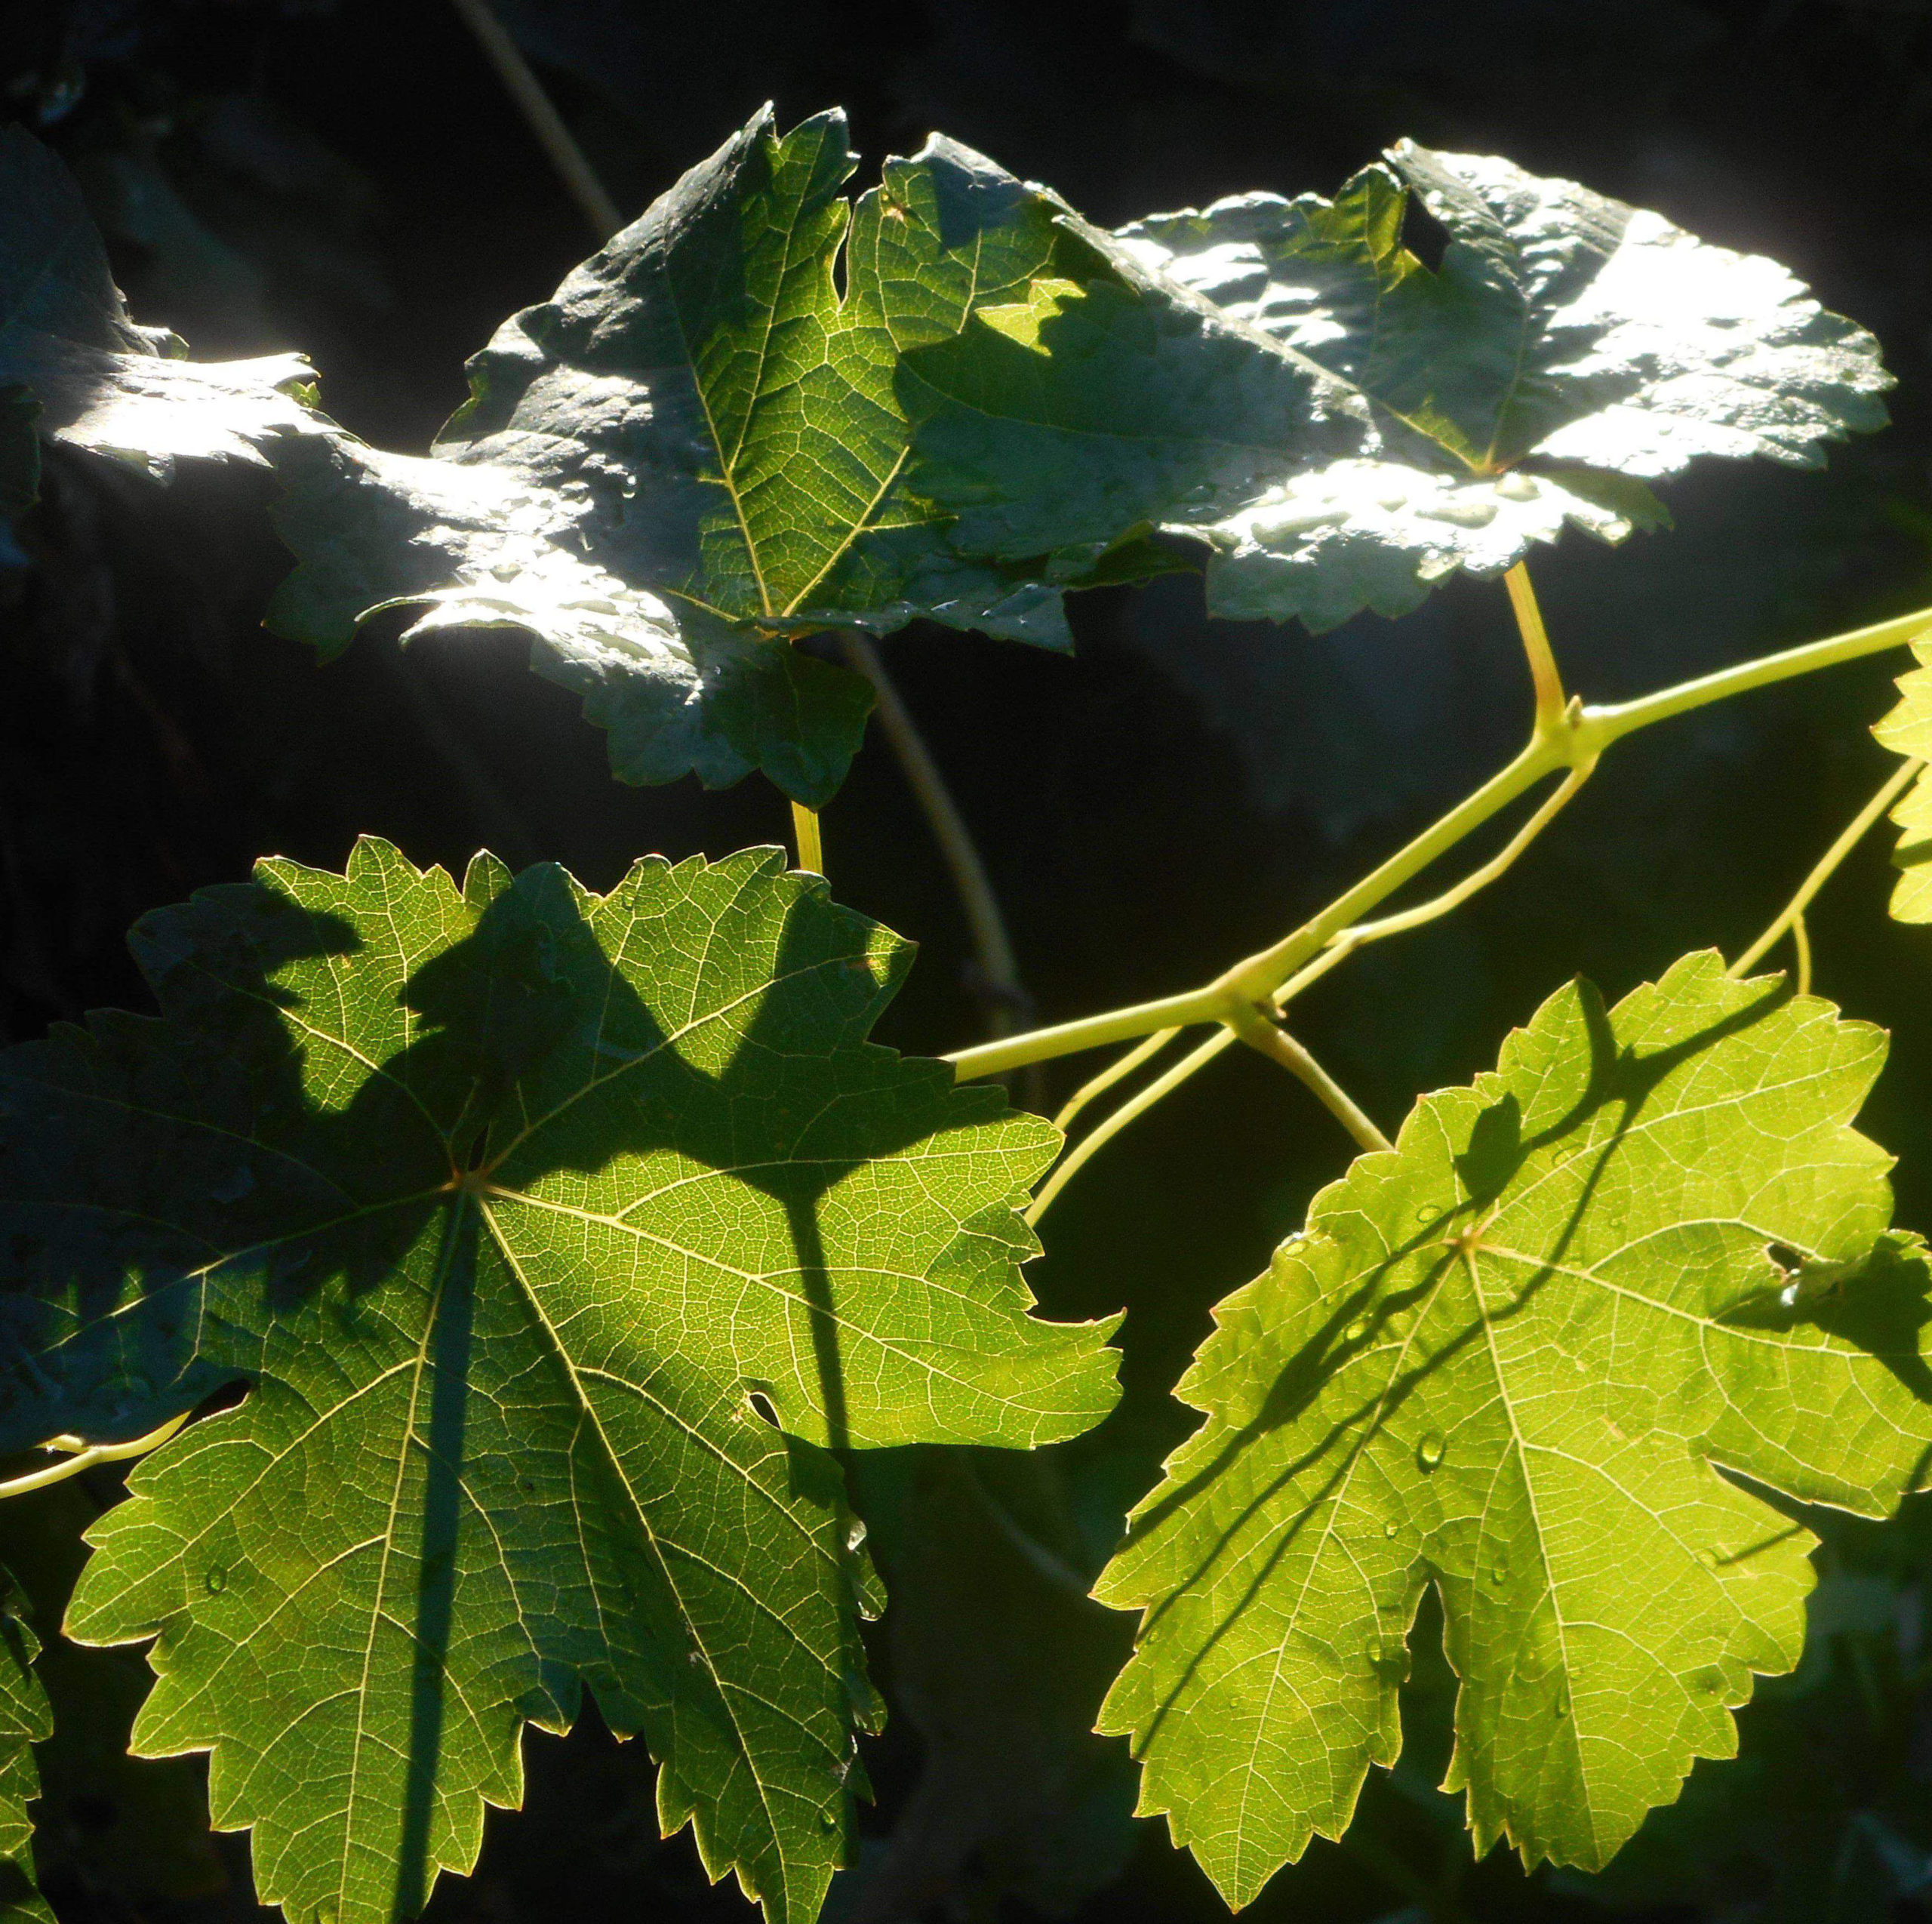 Grape vine light and shadow image. a photo of a grape vine being light and shaded by light.